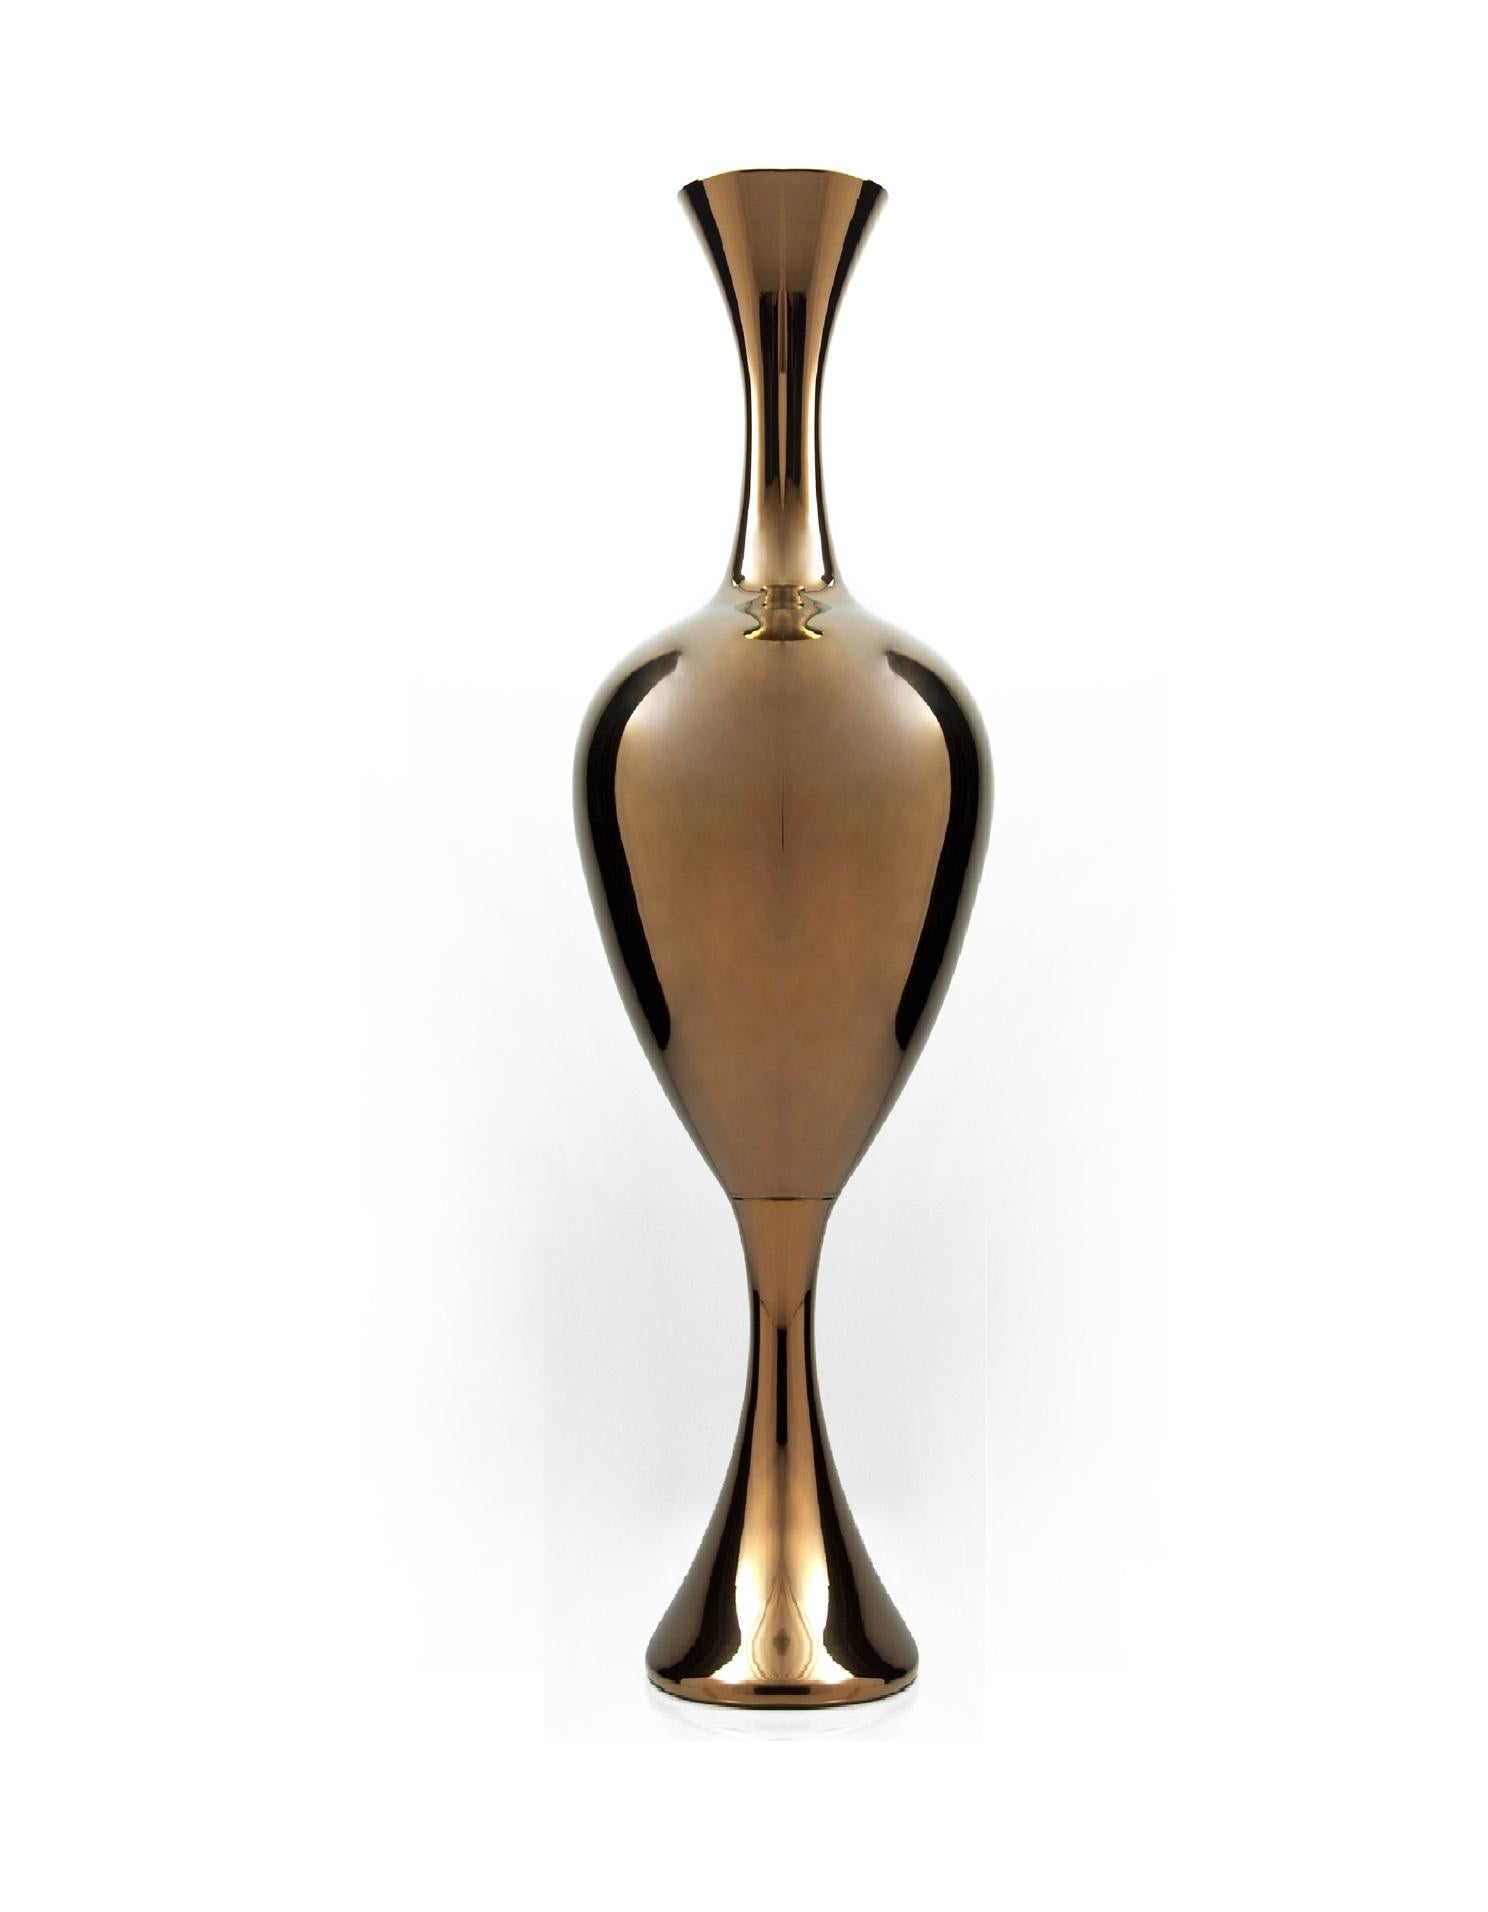 EVE-L - Ceramic vase handcrafted in bronze

code VS033. 
Measures: Height 200.0 cm., diameter. 60.0 cm.